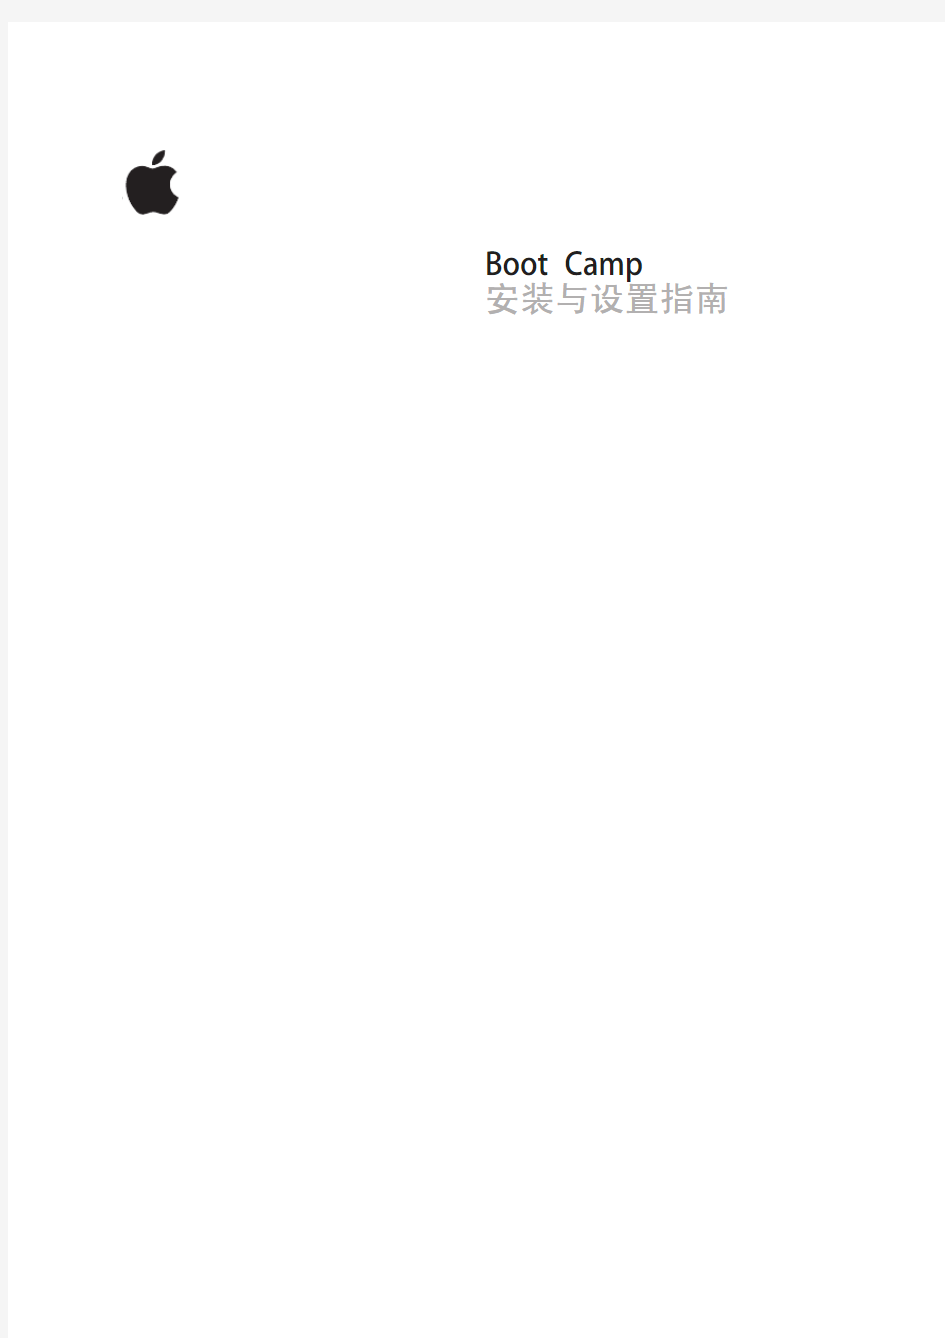 Boot Camp 安装与设置指南